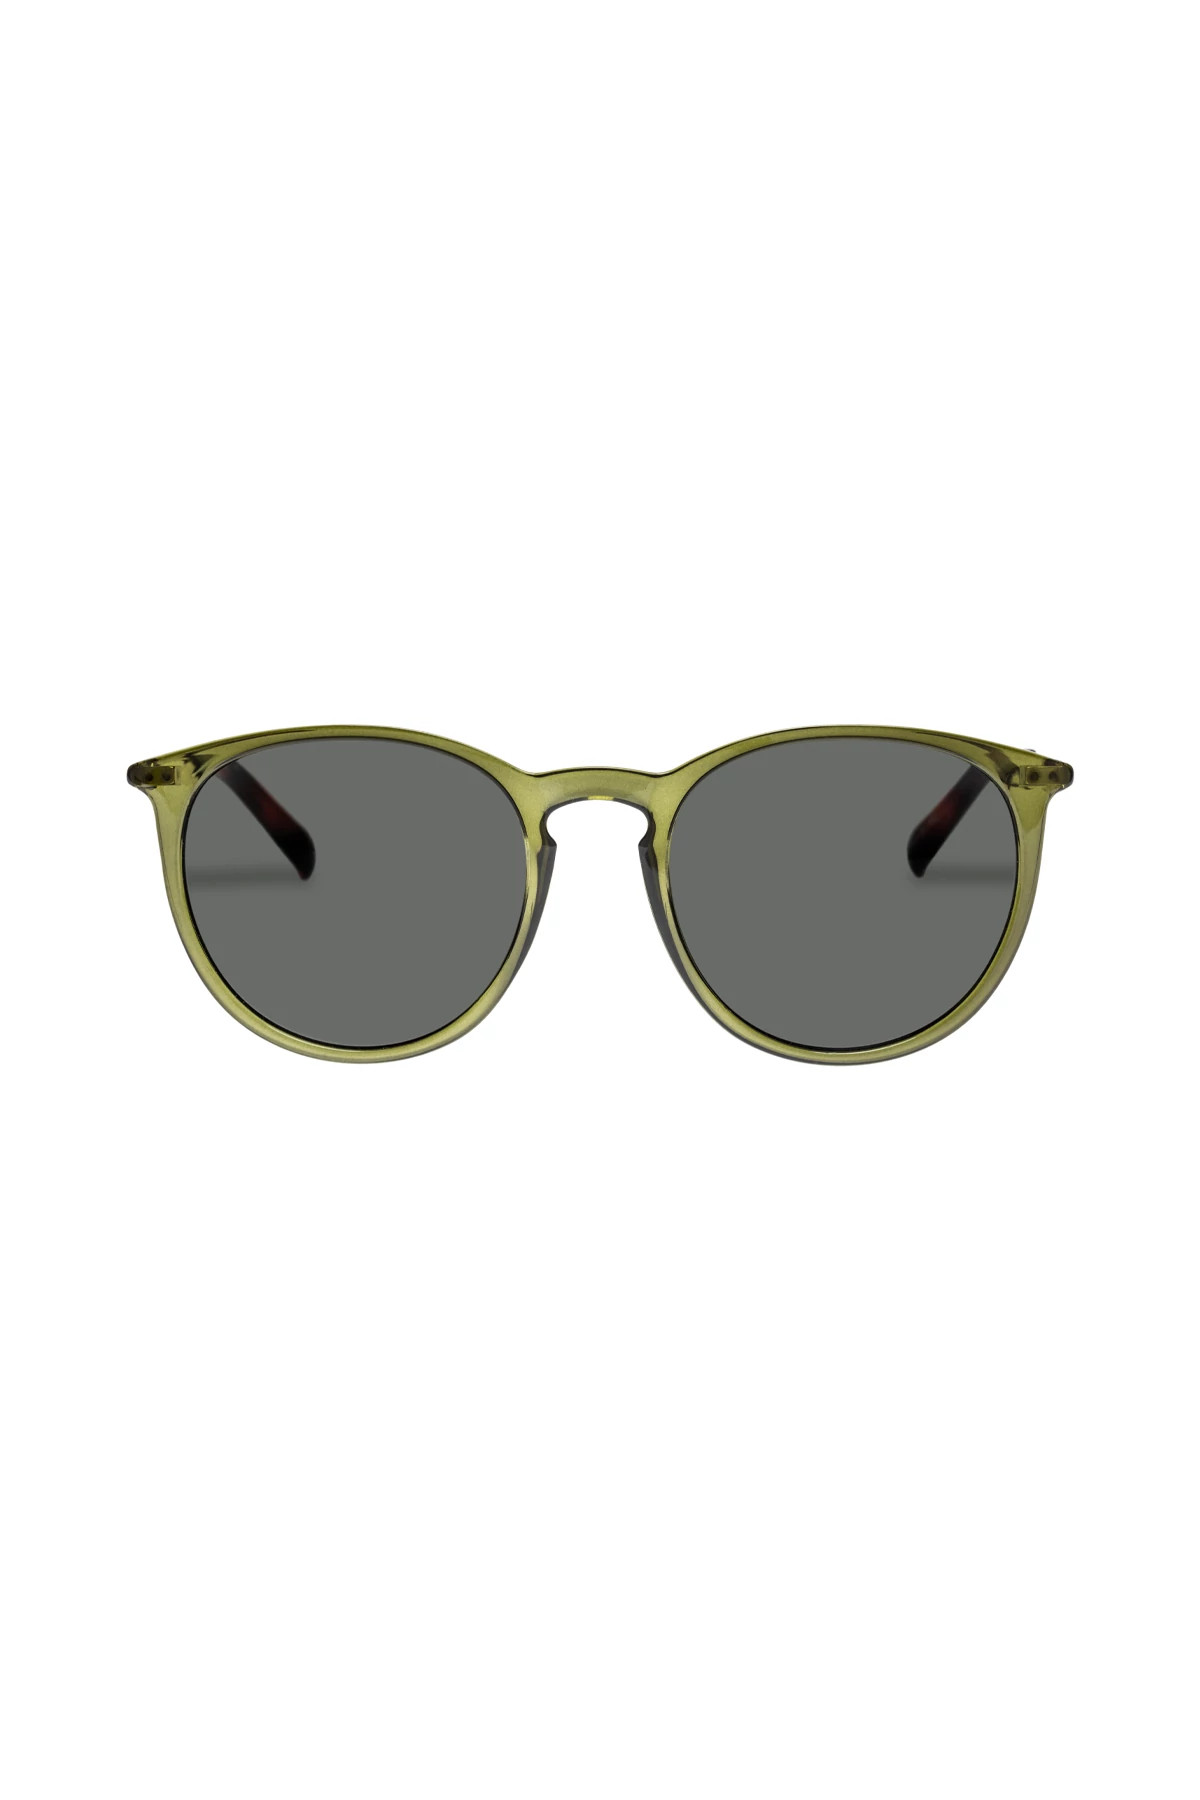 KHAKI/GOLD Oh Buoy Classic Round Sunglasses image number 2